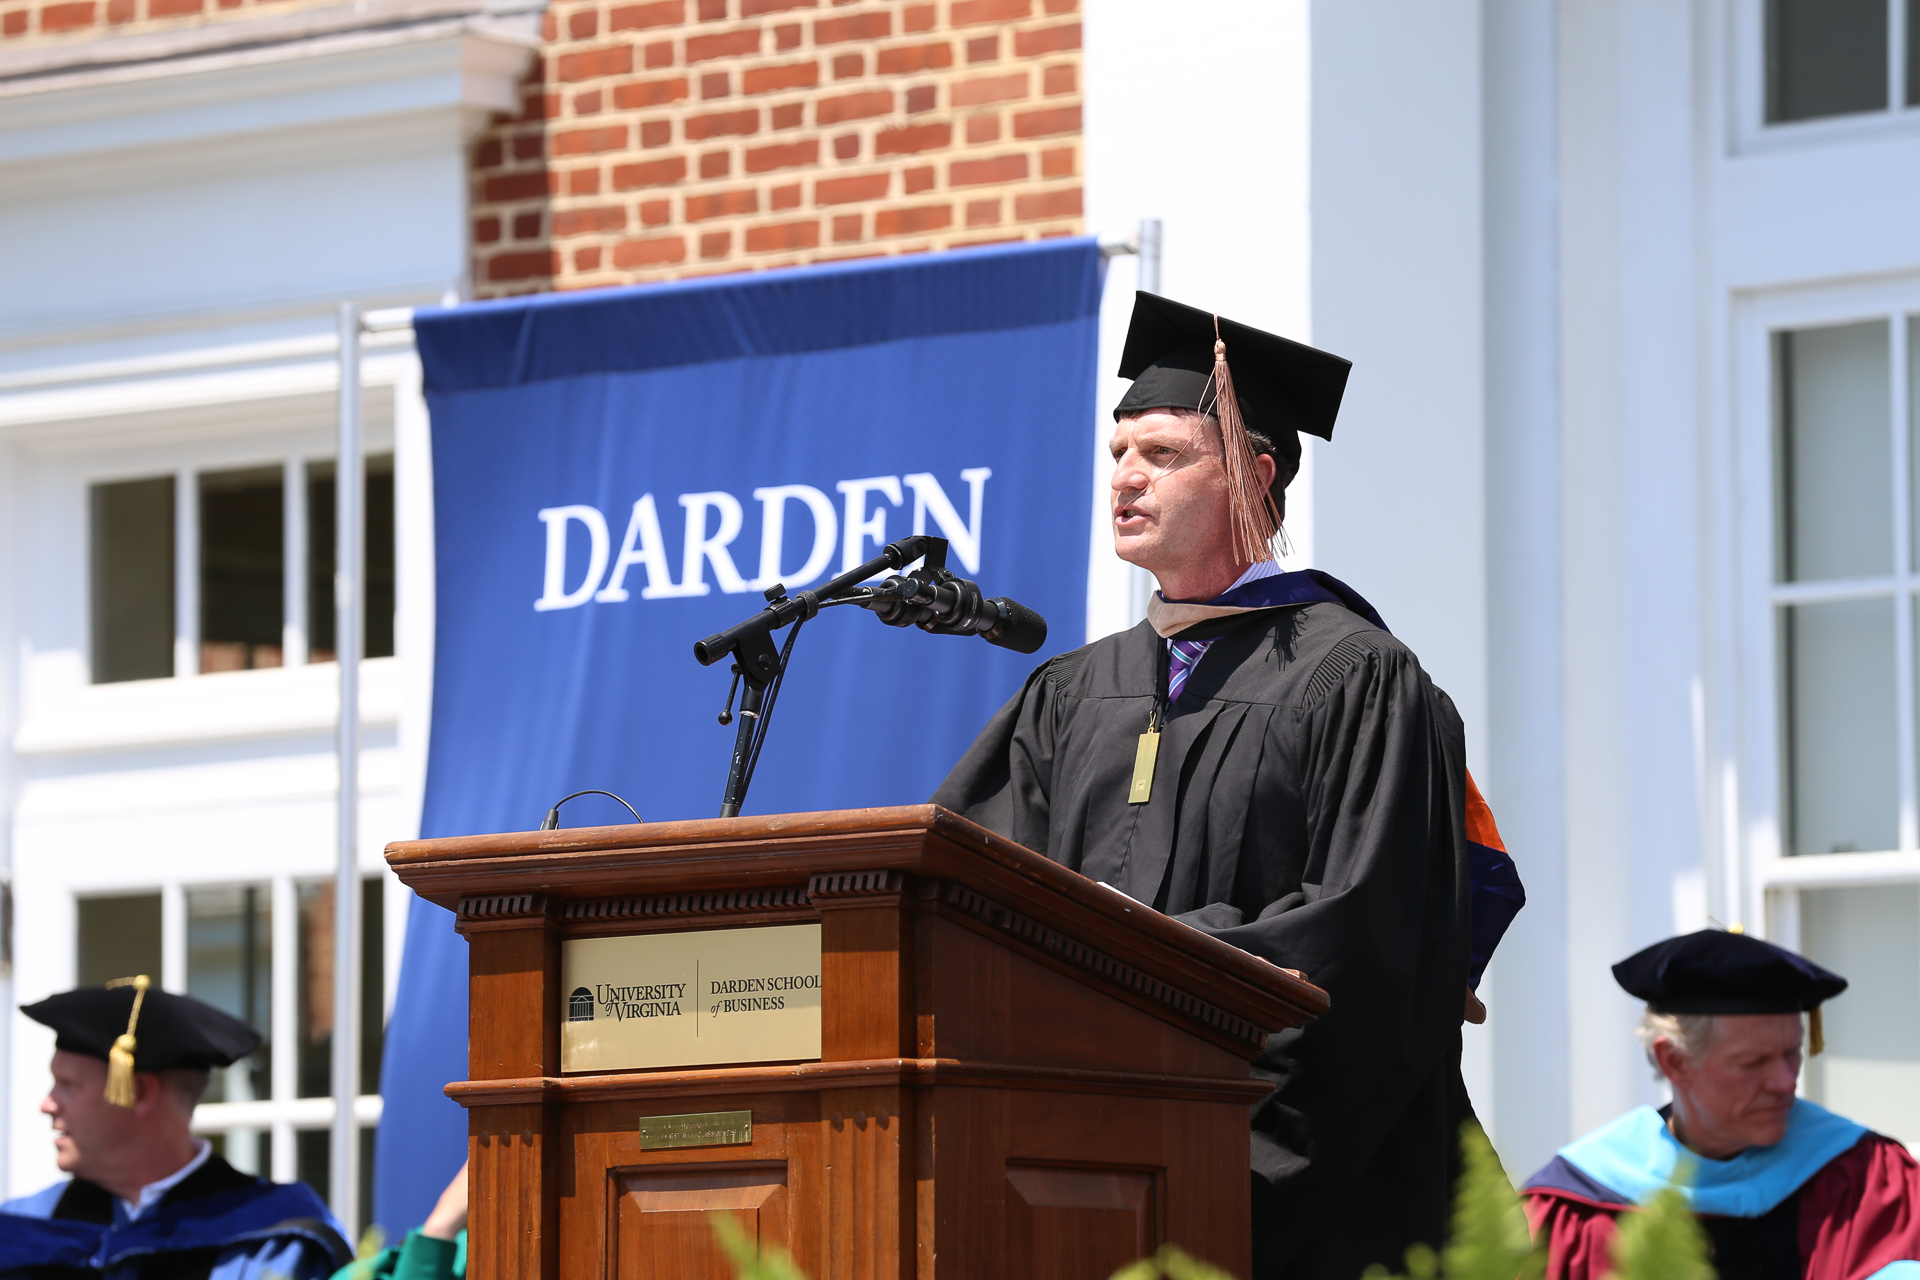 UVA Darden Executive MBA Graduates Report Major Salary Increases Over